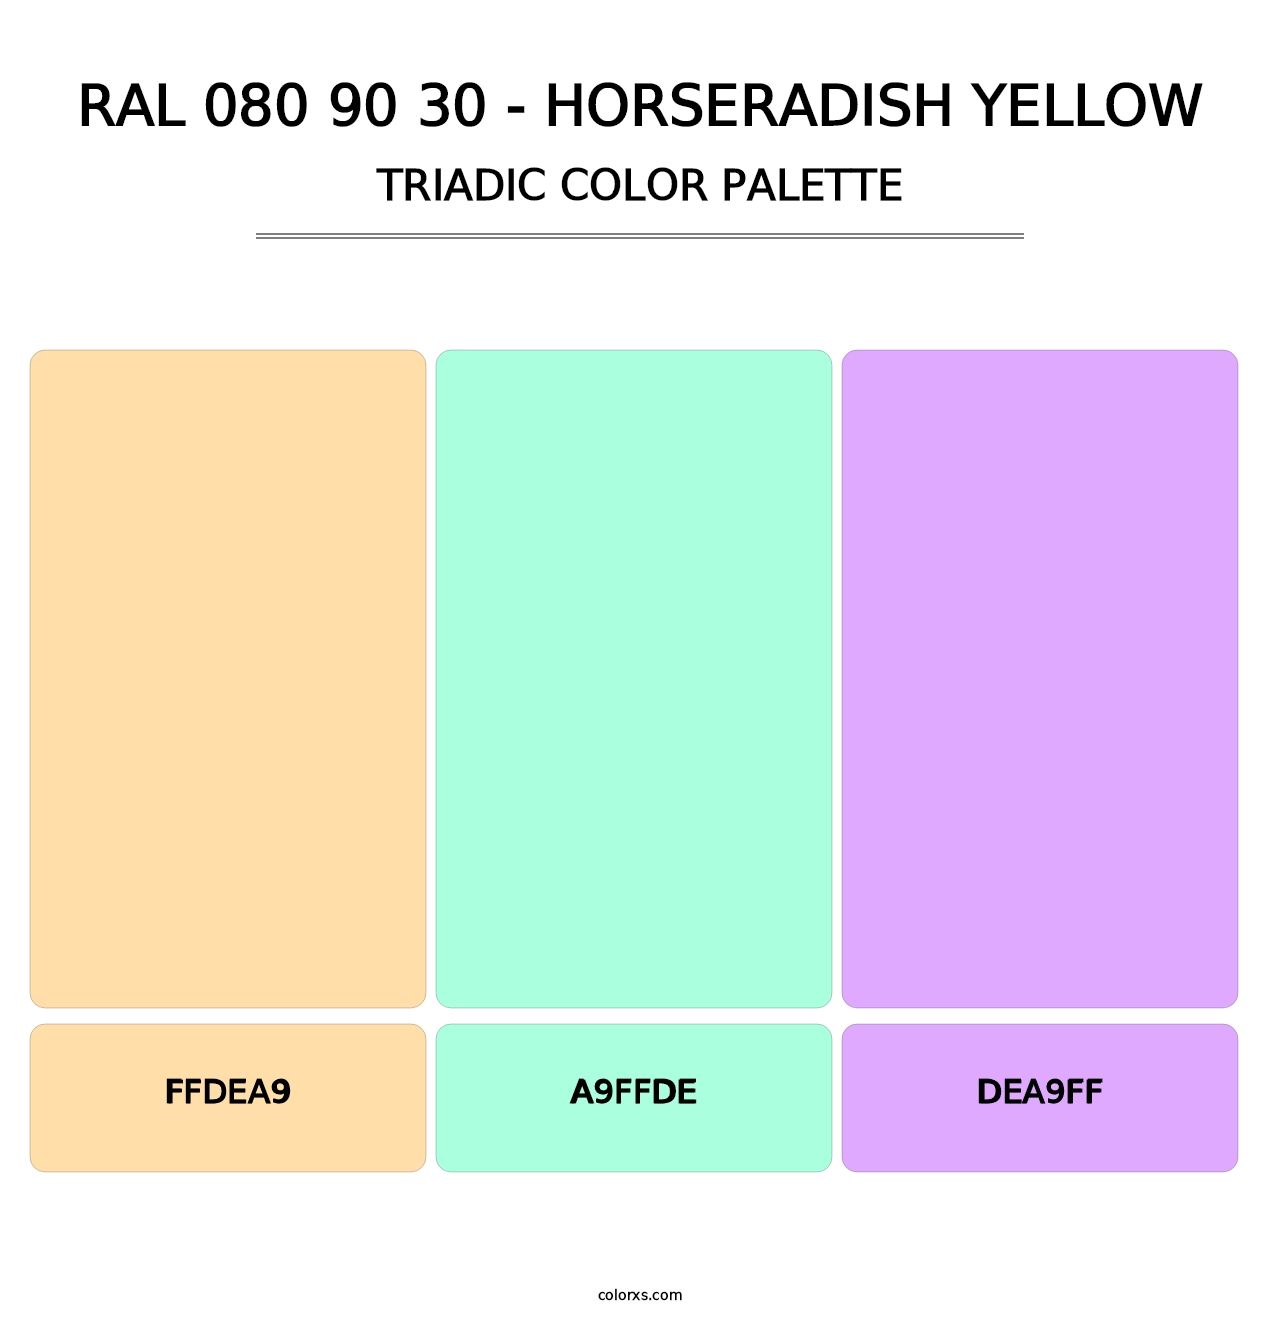 RAL 080 90 30 - Horseradish Yellow - Triadic Color Palette